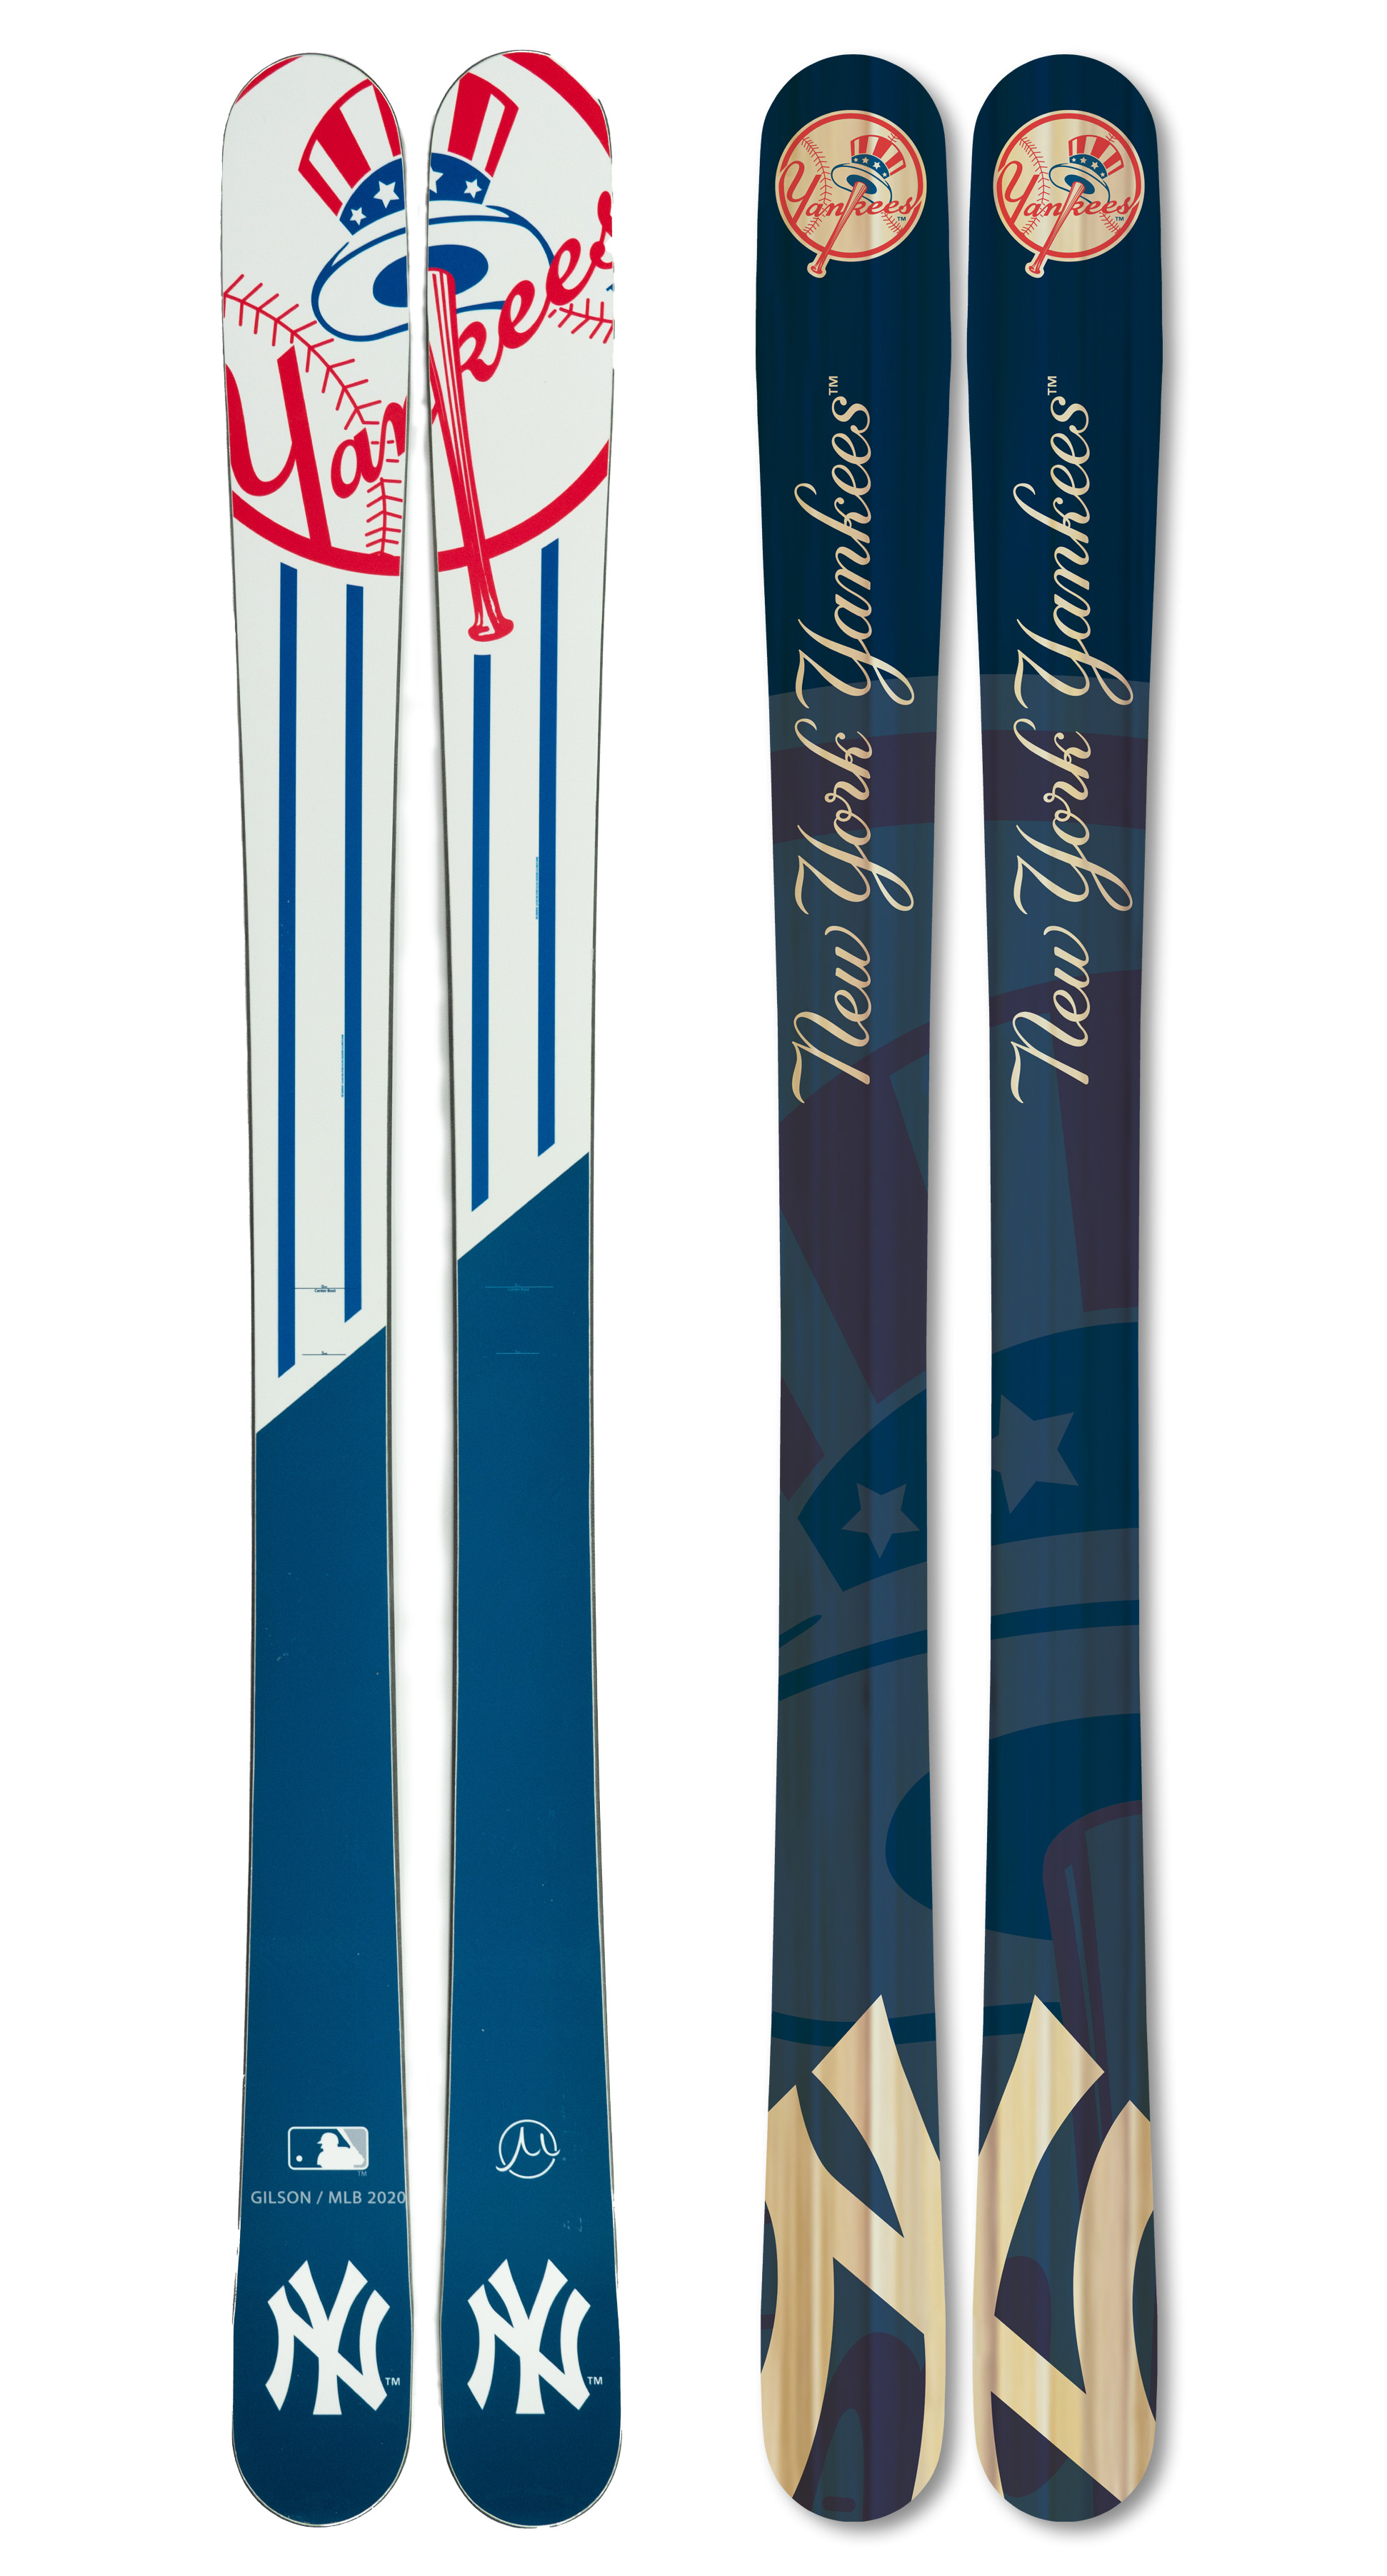 Mlb new york yankees skis large